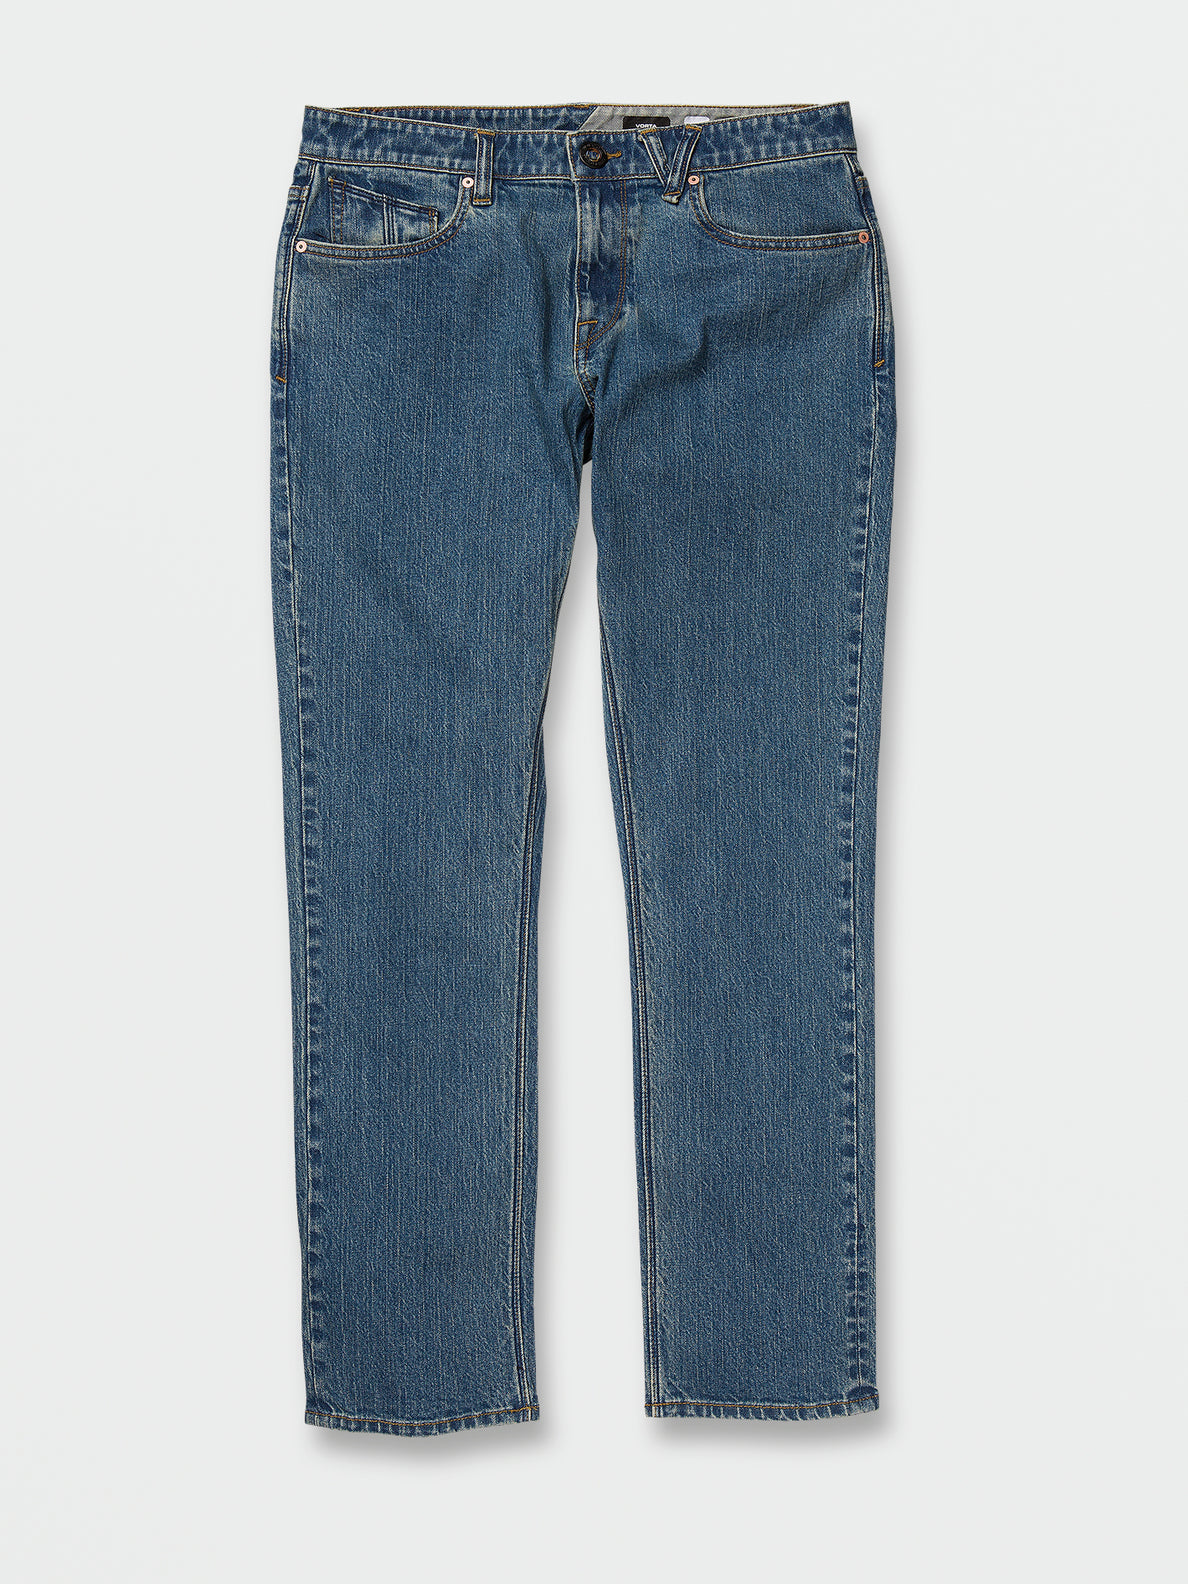 Vorta Slim Fit Jeans - Aged Indigo (A1932203_AIN) [F]